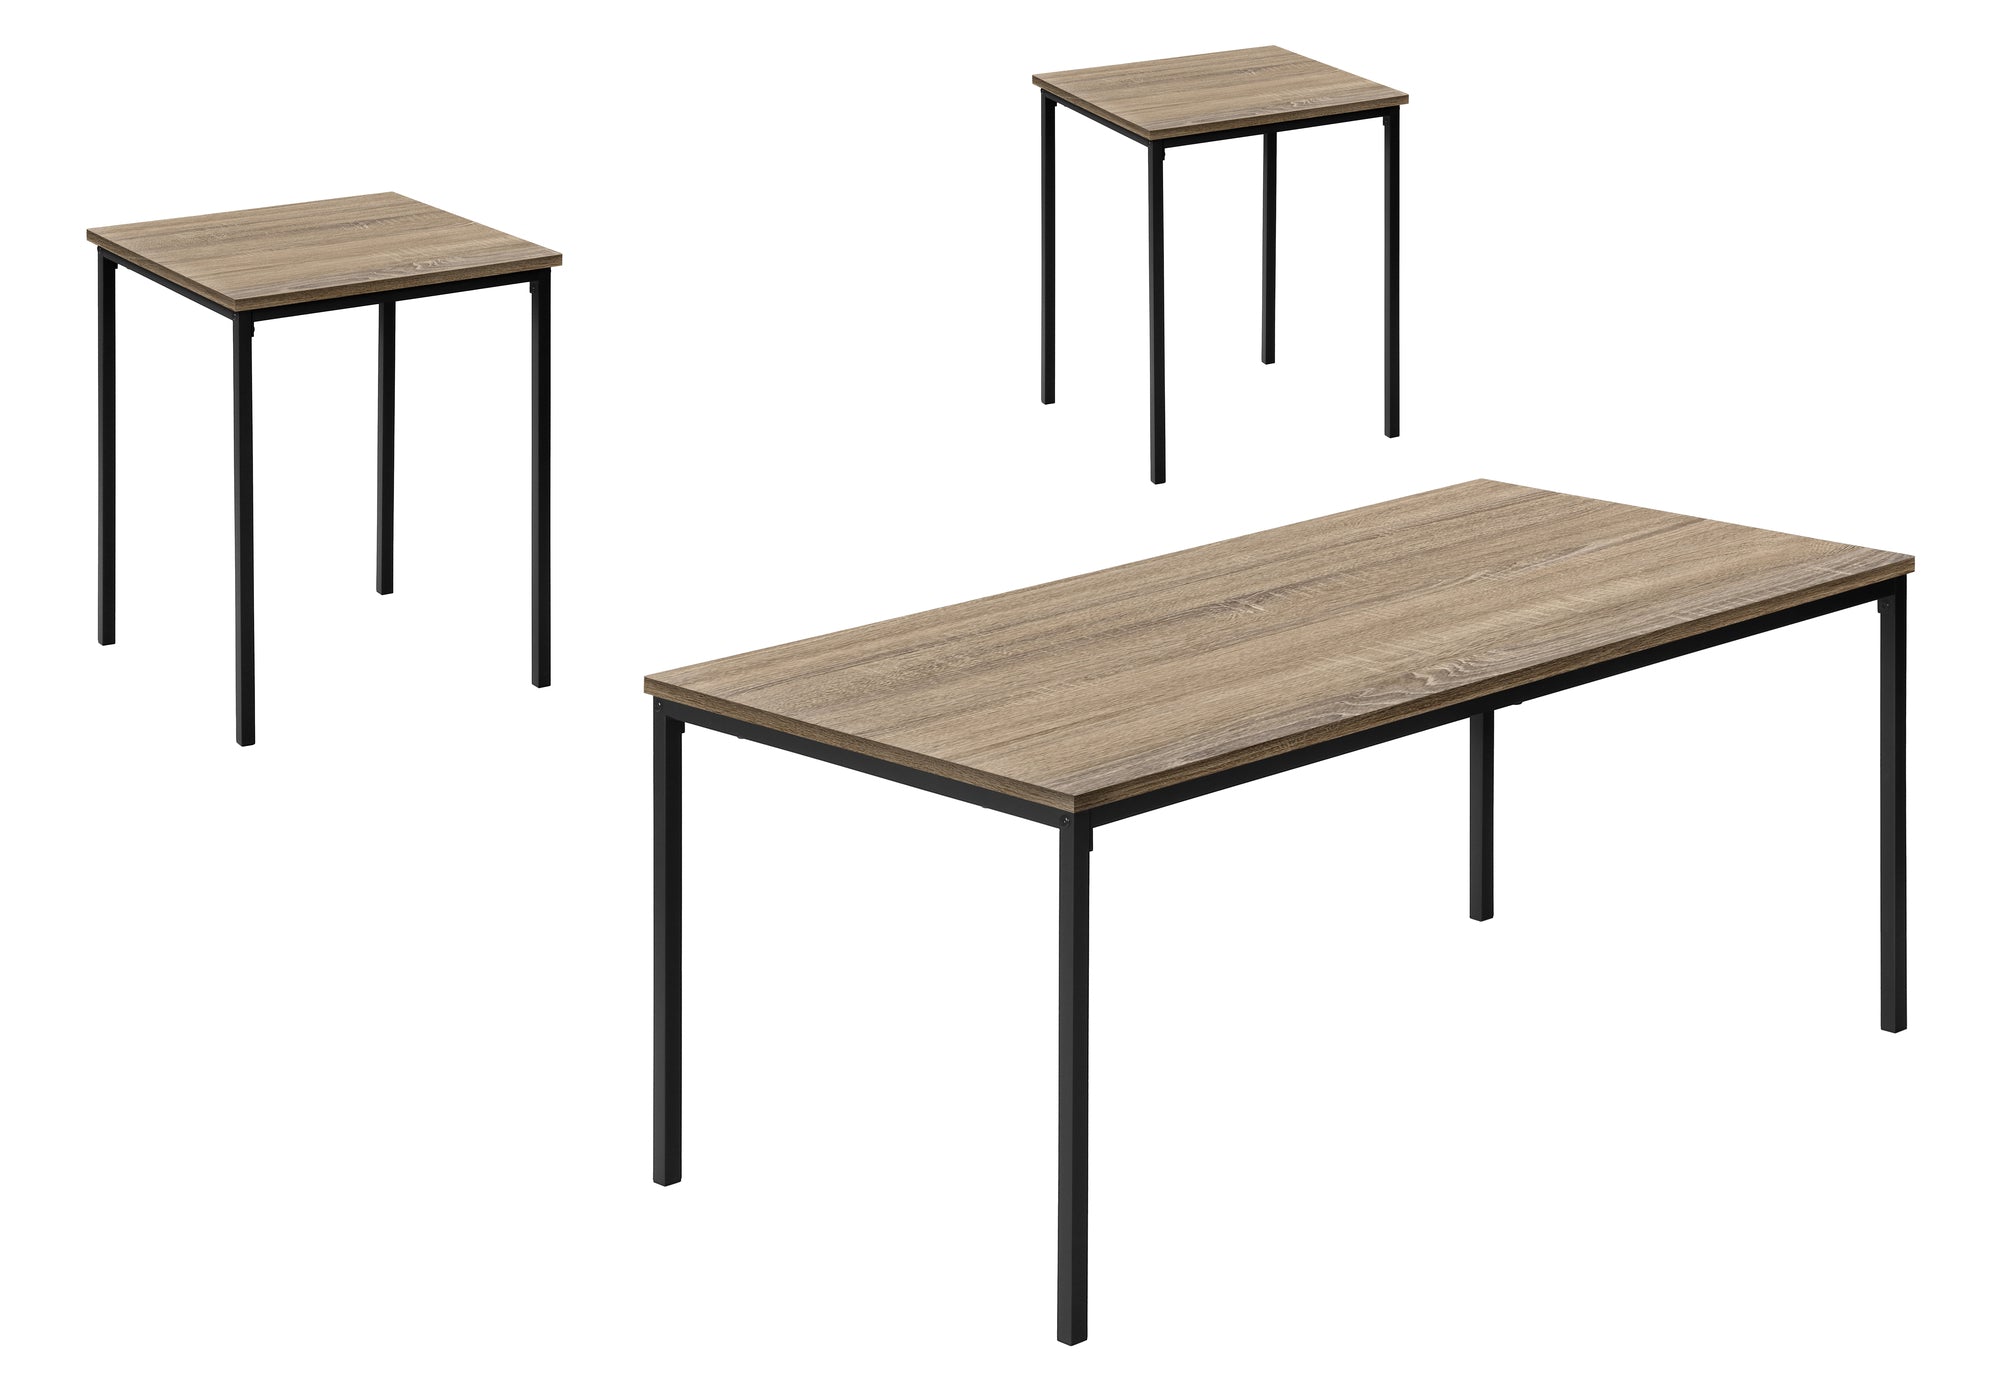 MN-177895P    Table Set, 3pcs Set, Coffee, End, Black Metal, Dark Taupe Laminate, Contemporary, Modern